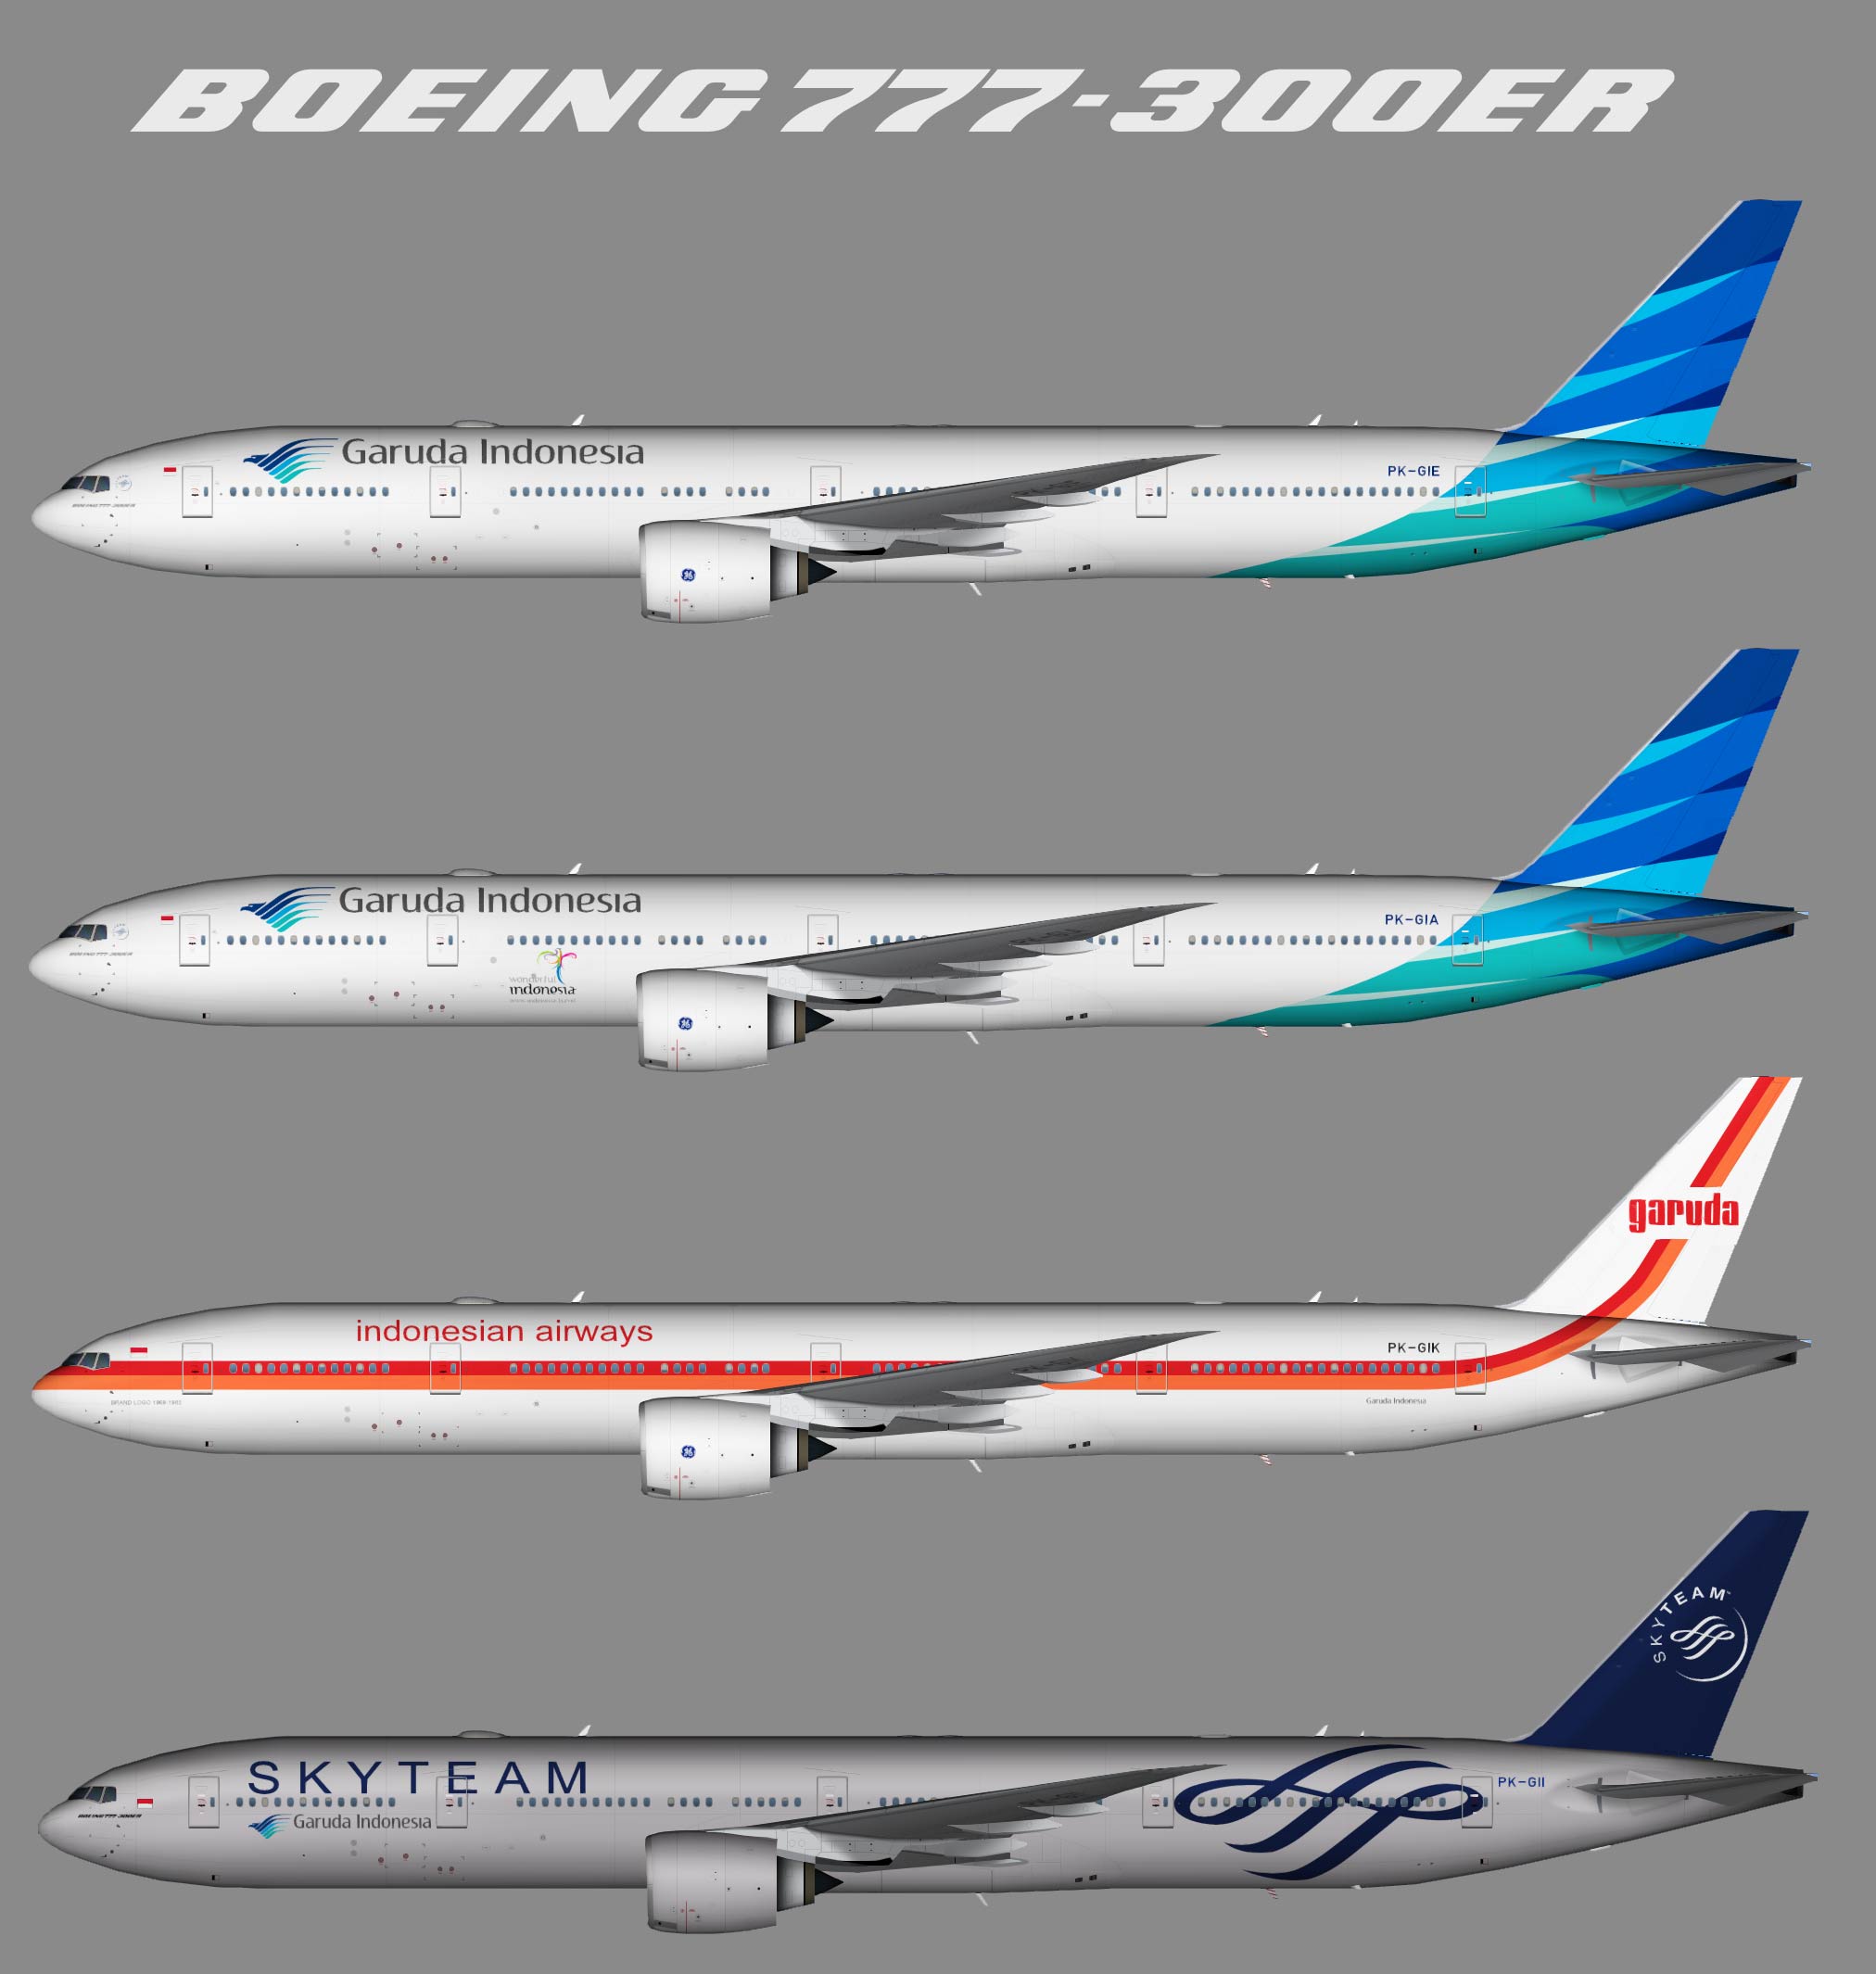 Boeing 777-300ER Garuda Indonesia